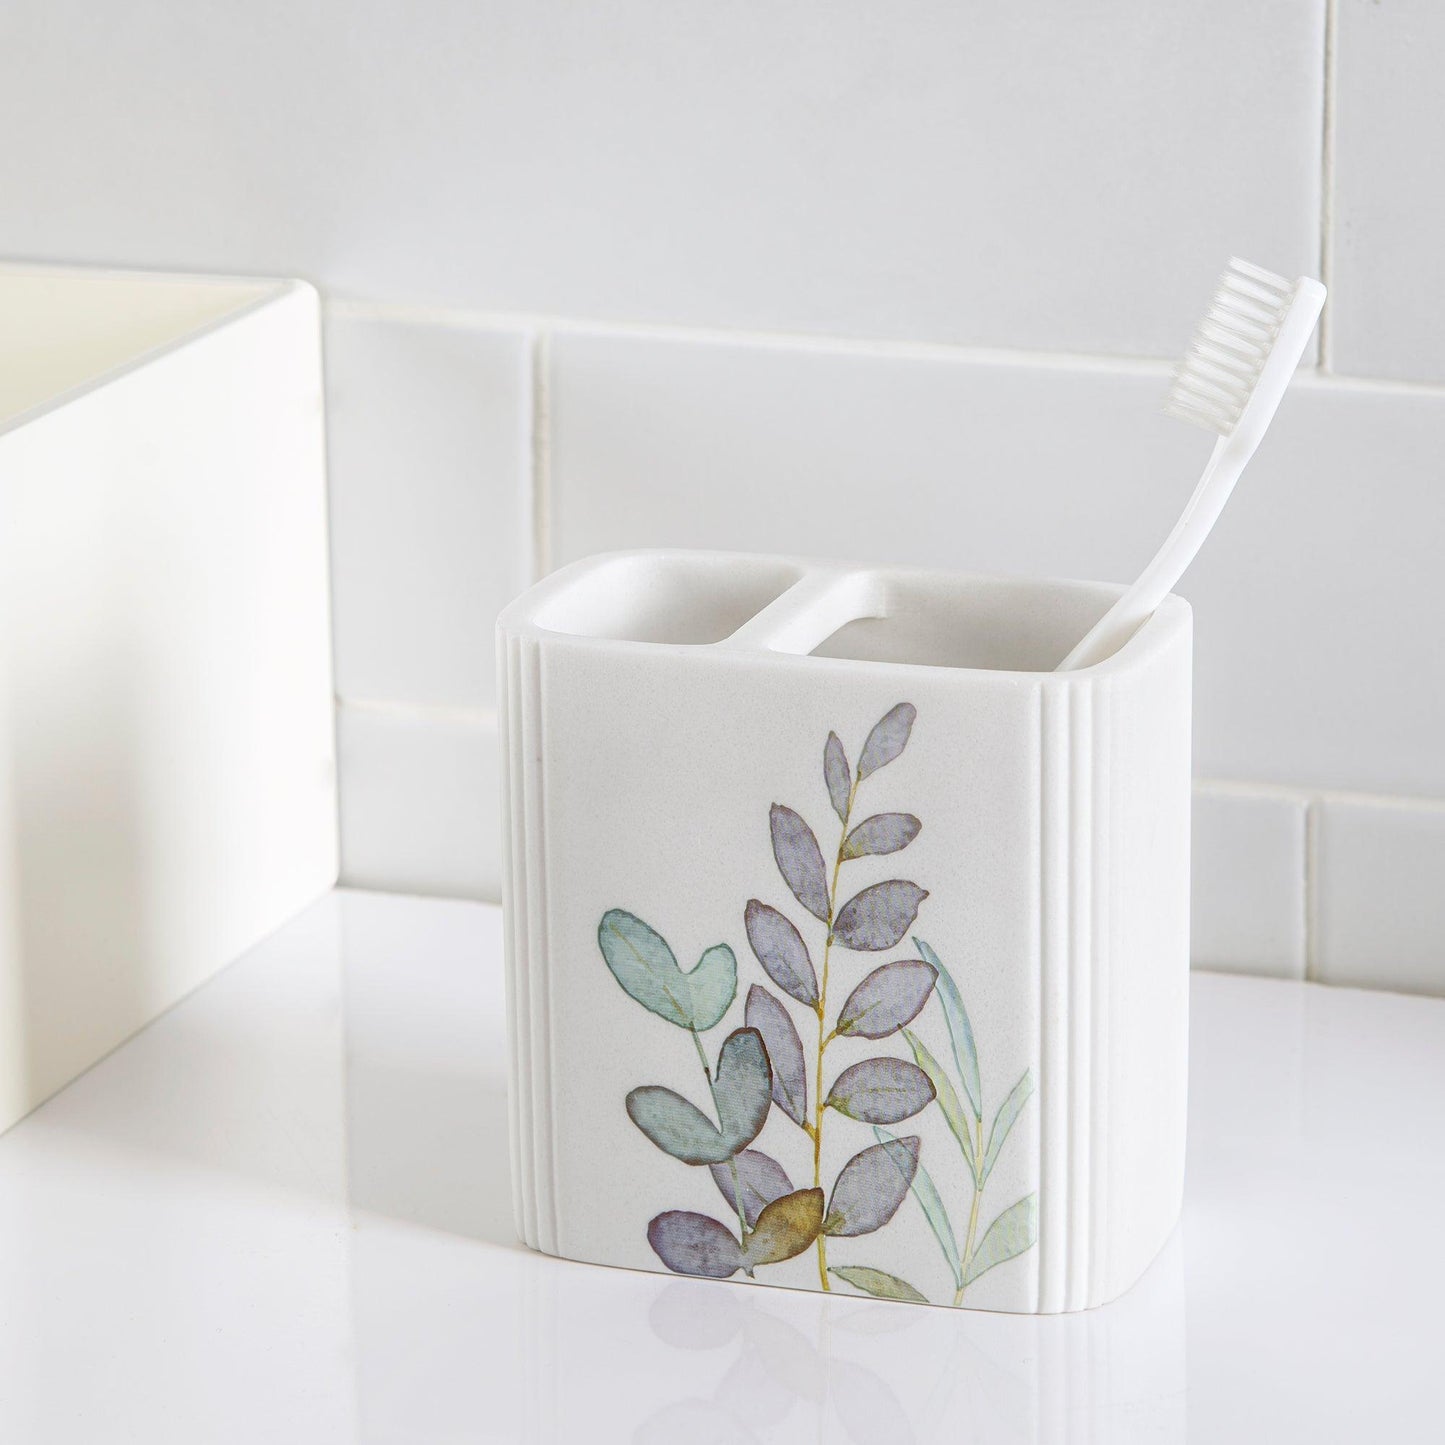 Botanical Toothbrush Holder - Allure Home Creation